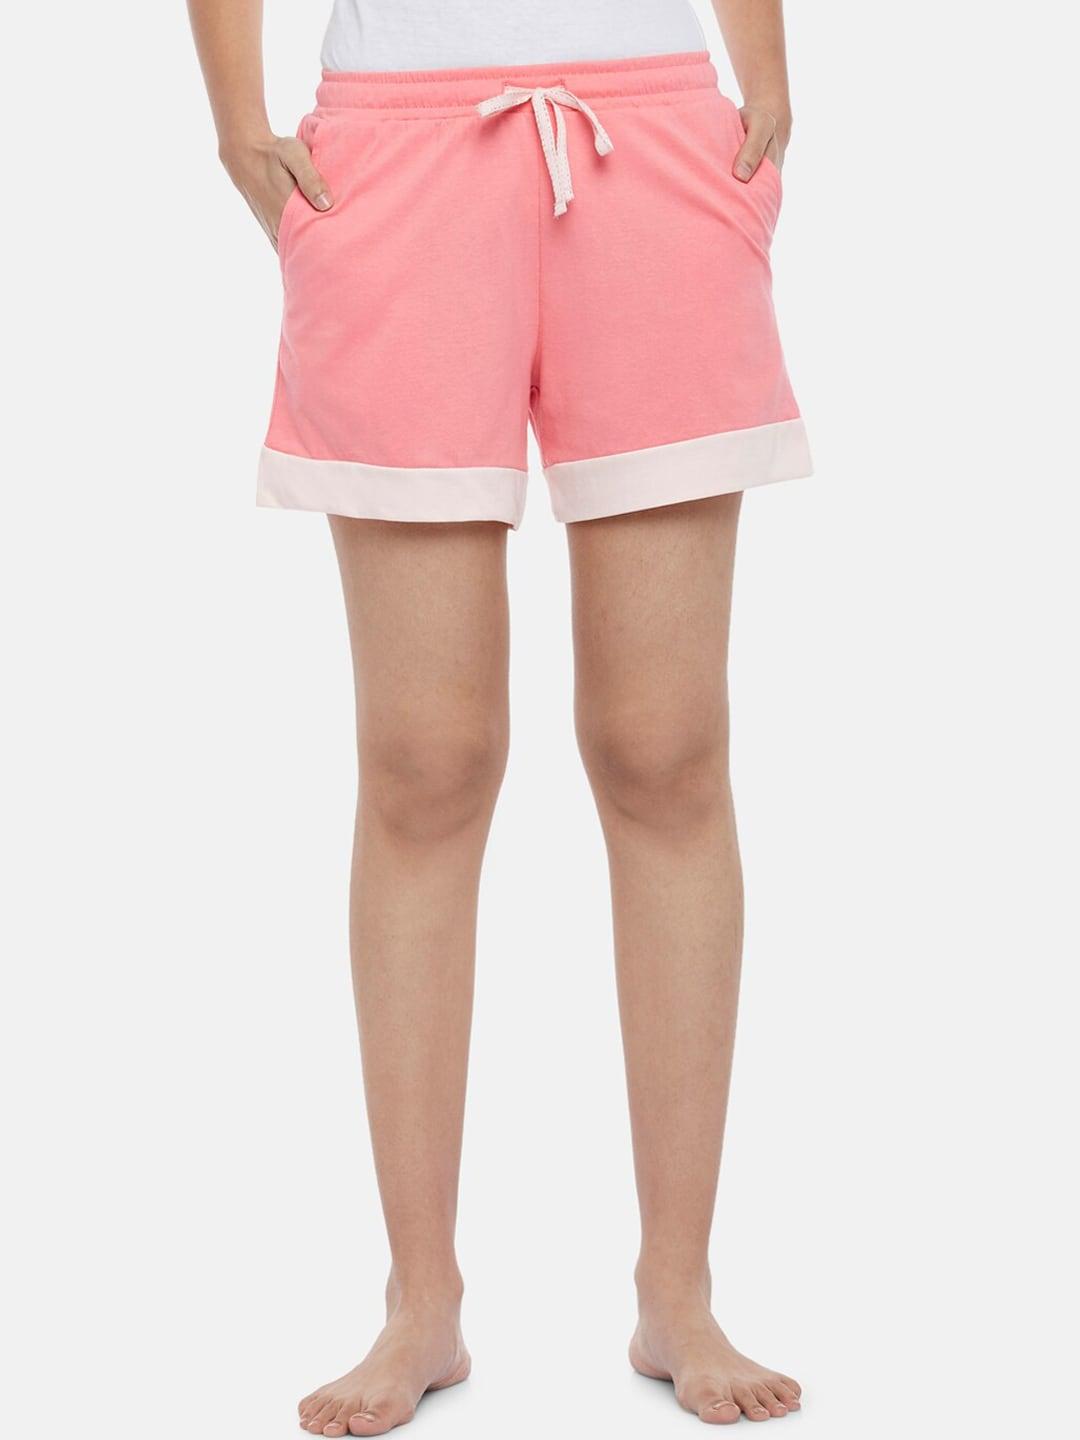 dreamz-by-pantaloons-women-pink-lounge-shorts